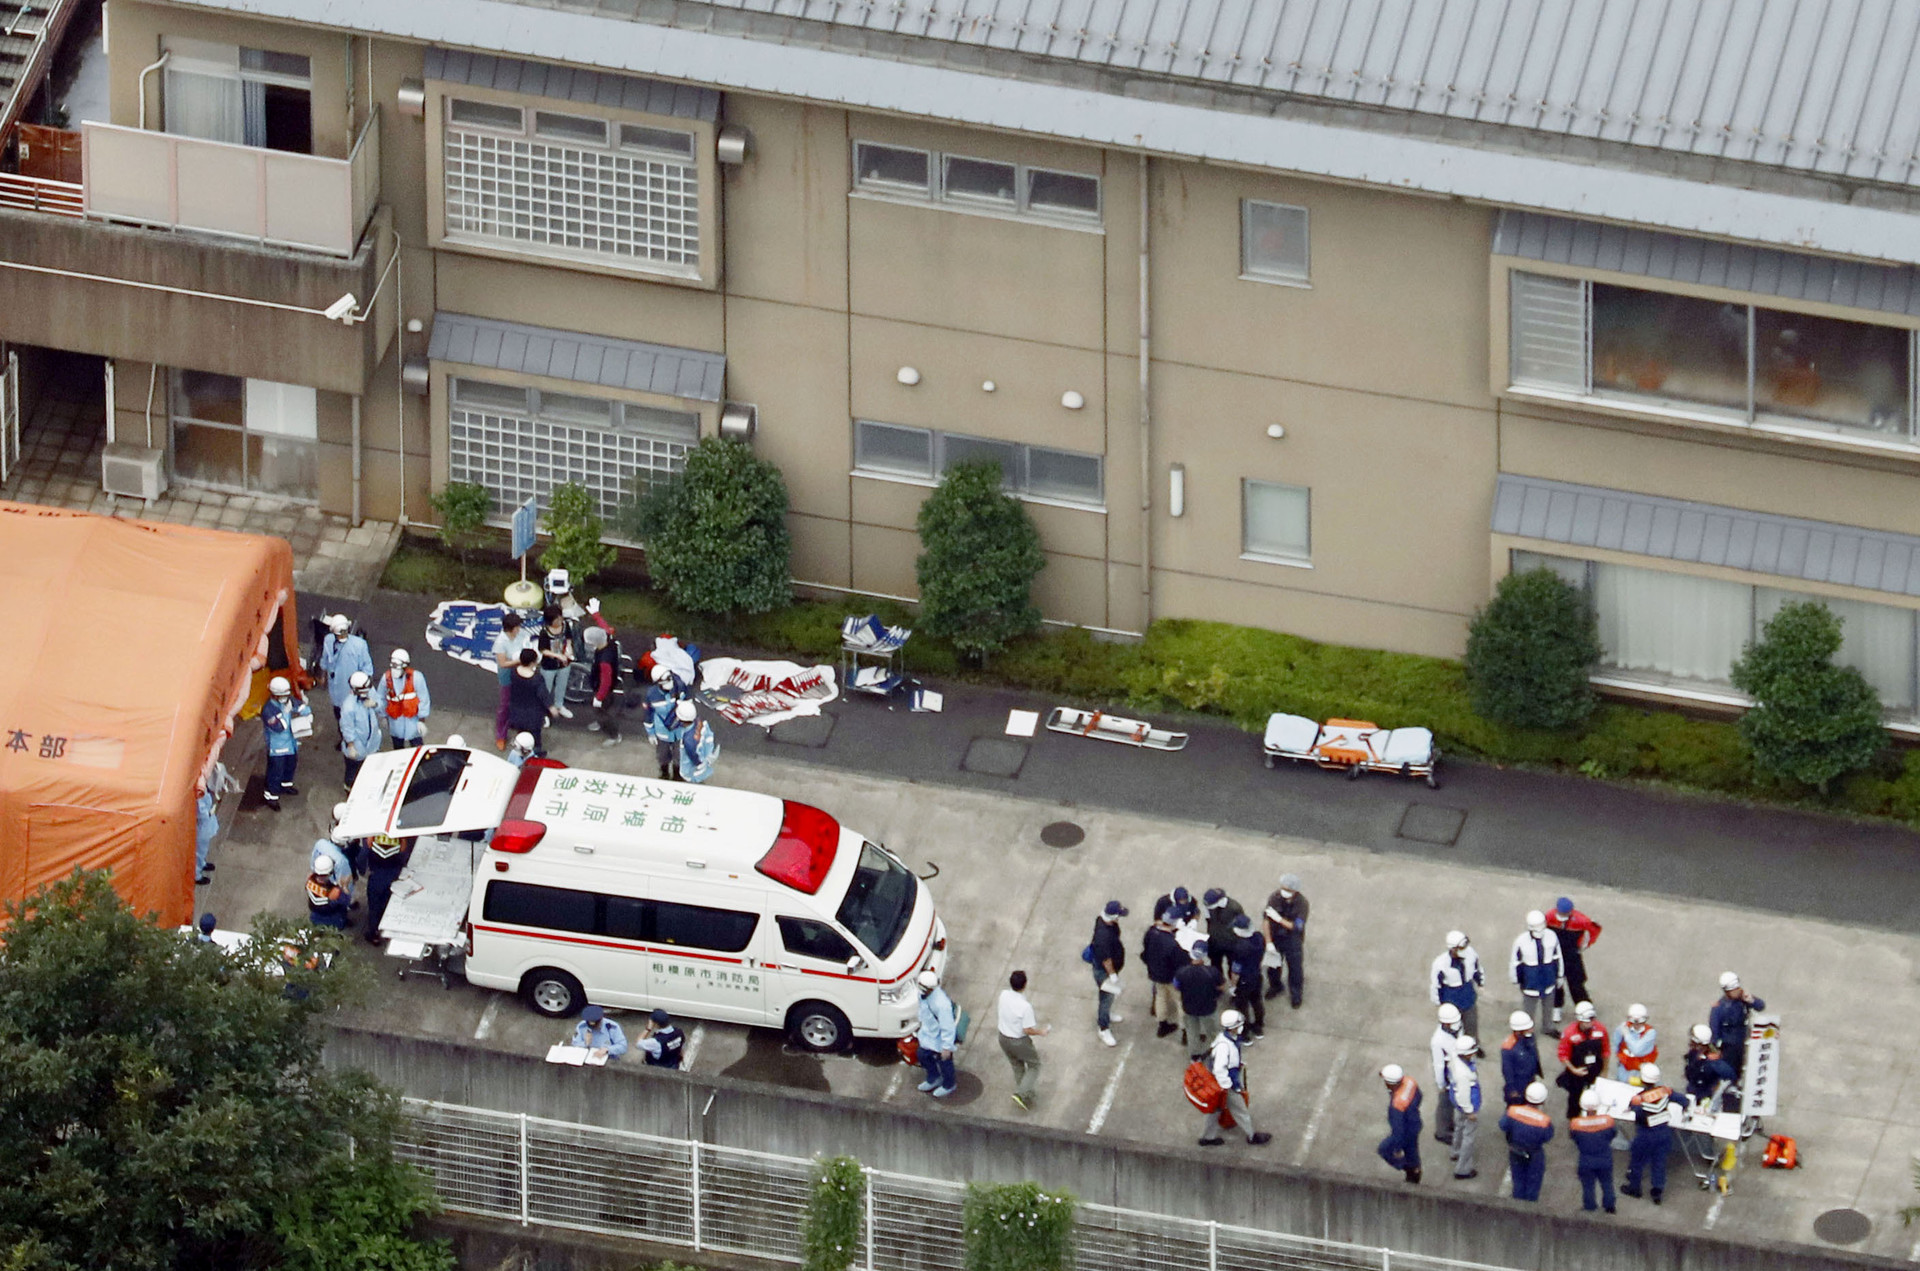  19 muertos durante ataque a centro para discapacitados en Japón